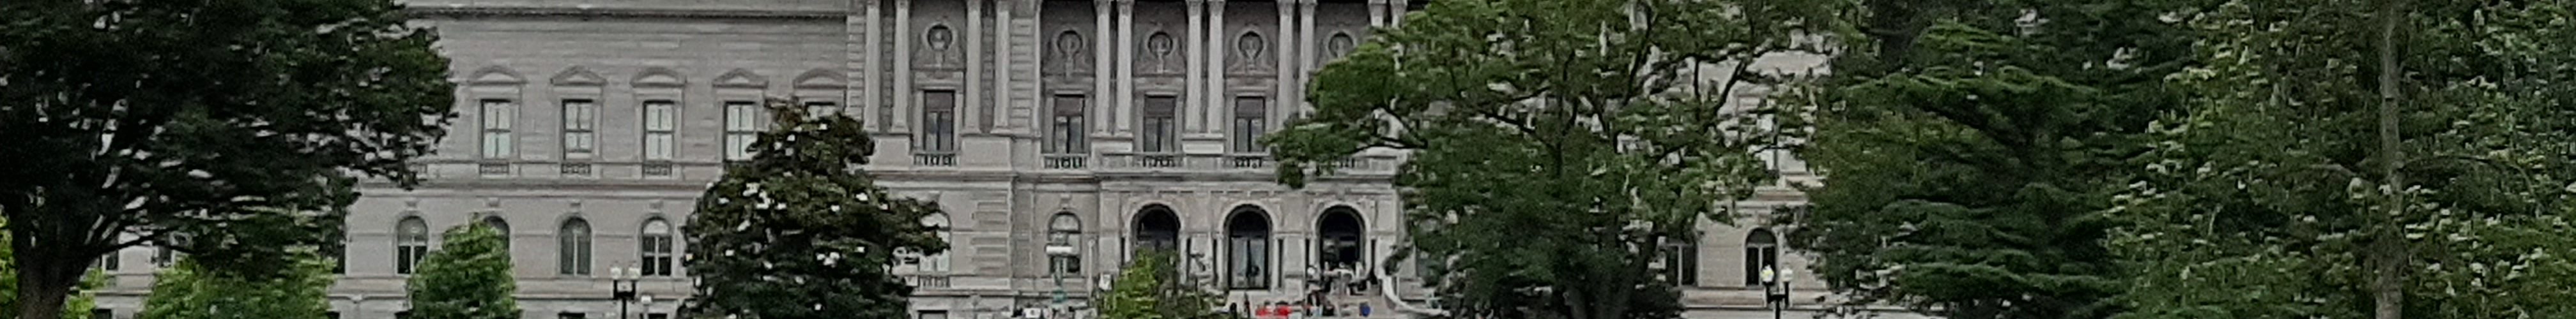 Foto exterior de la Library of Congress